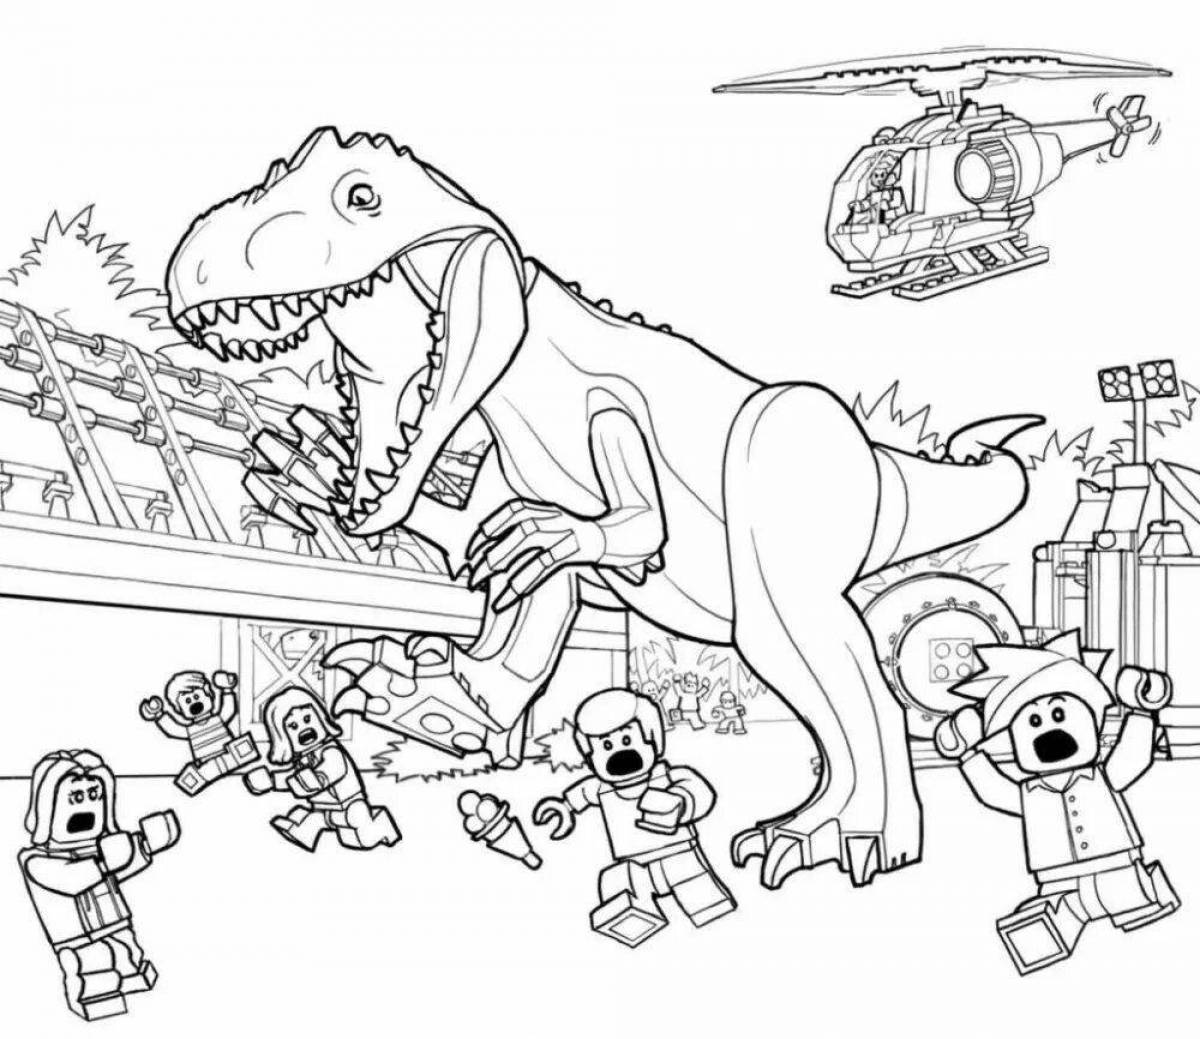 Impressive mega dinosaurs coloring book